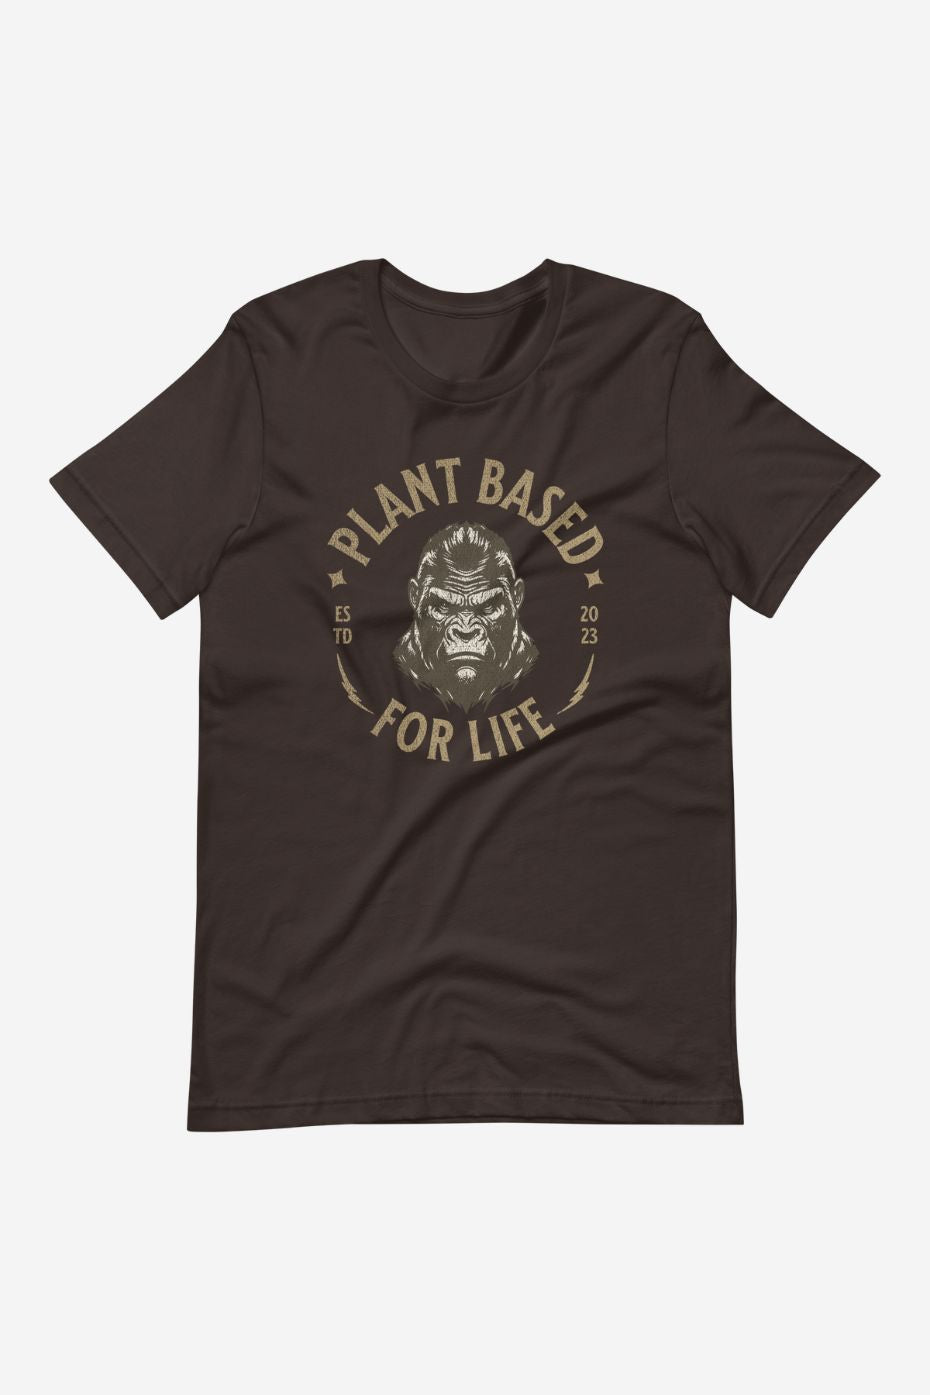 Plant Based For Life - Unisex t-shirt